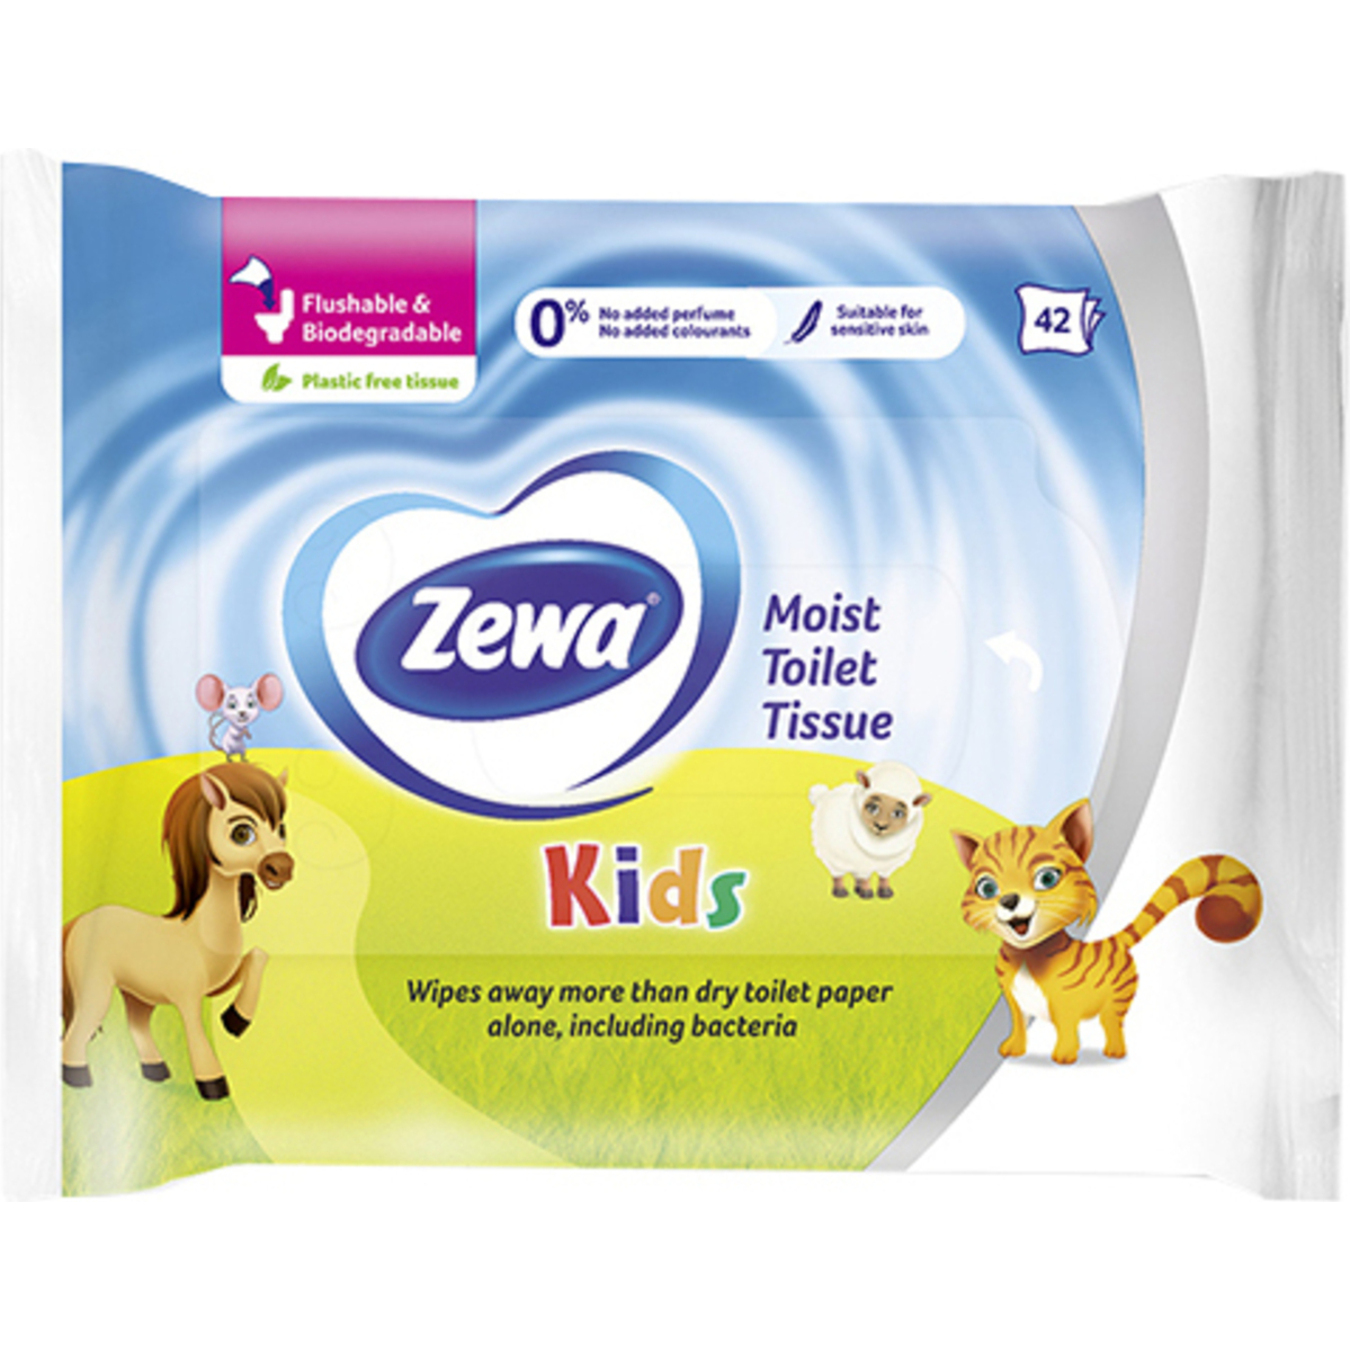 Zewa Kids wet toilet paper 42sheets